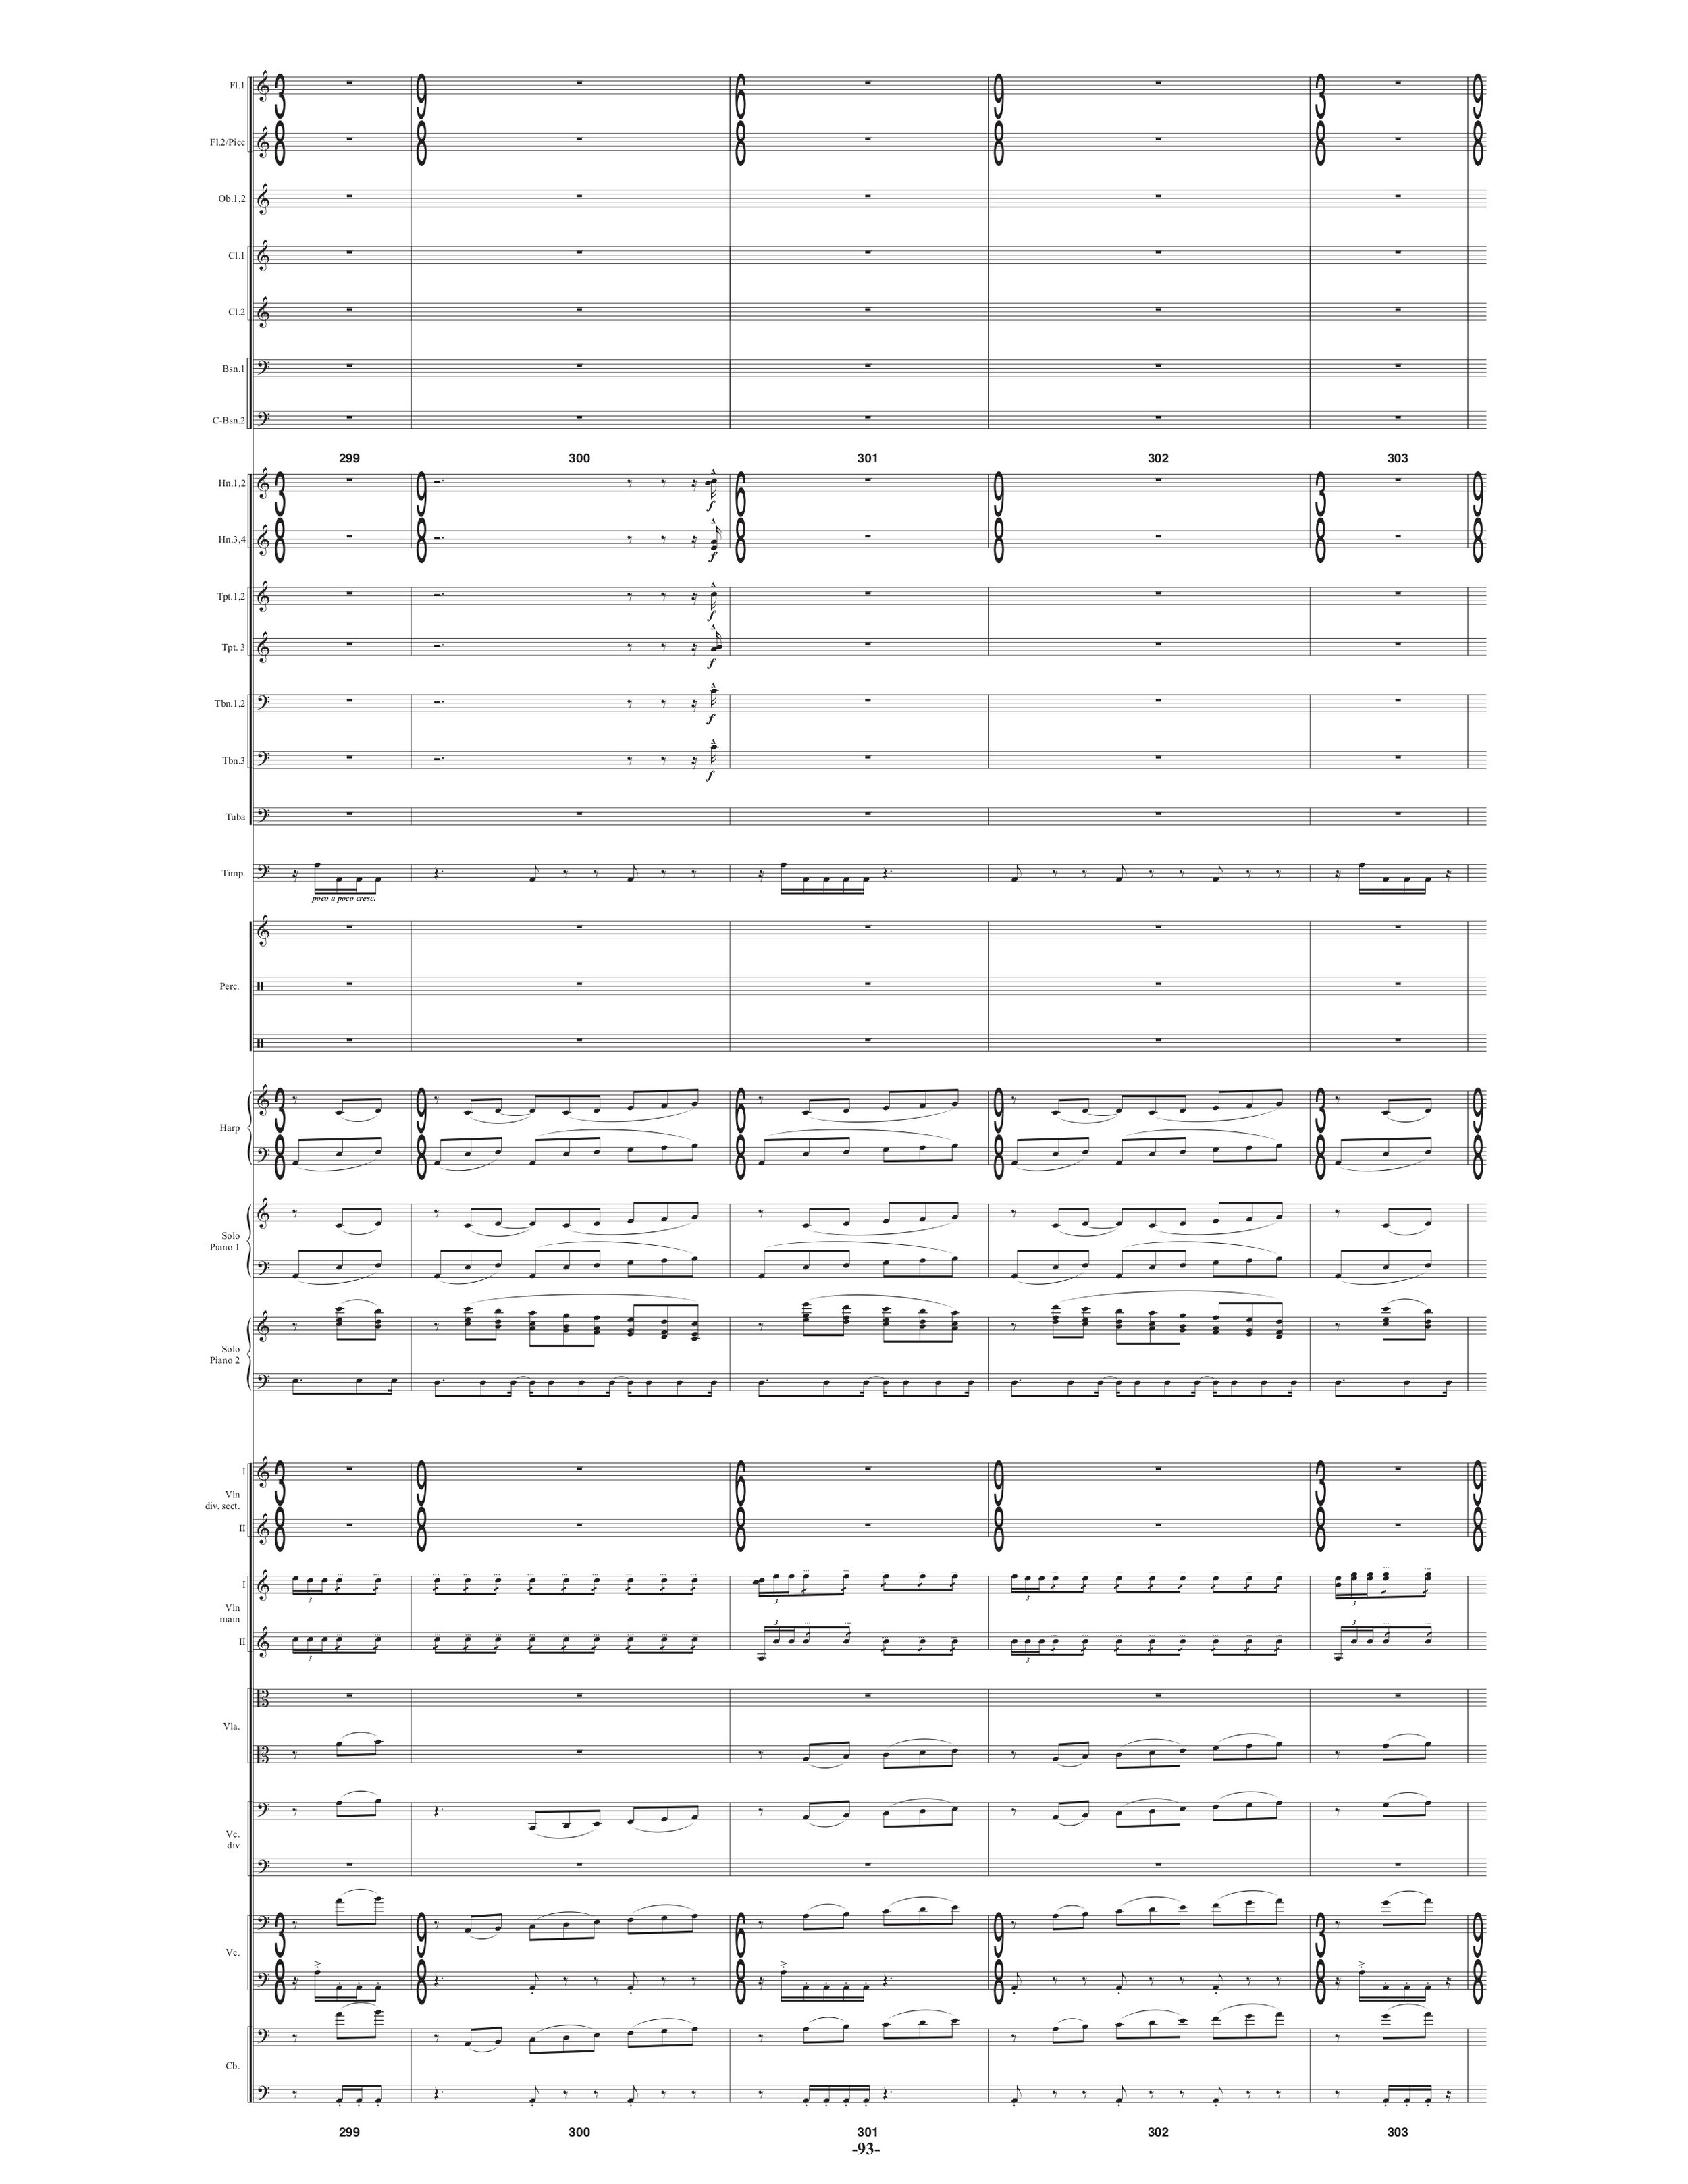 Symphony_Orch & 2 Pianos p98.jpg